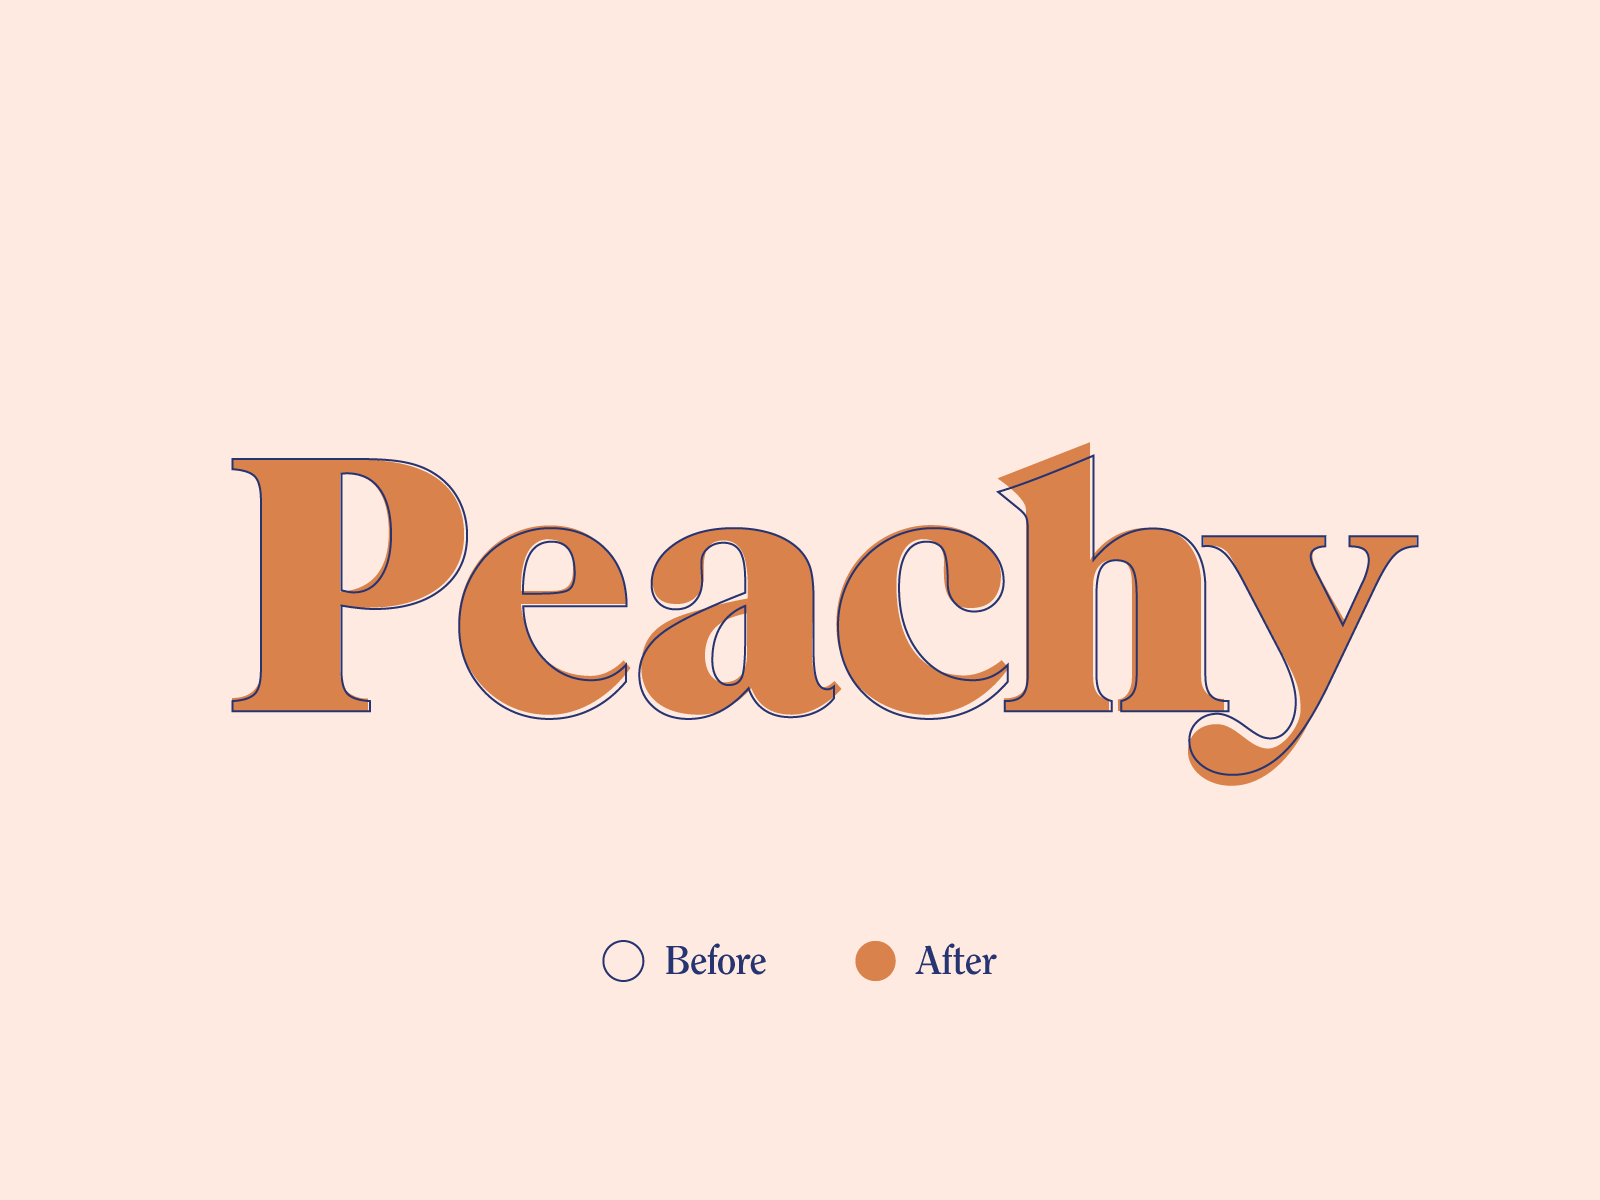 Peachy mods